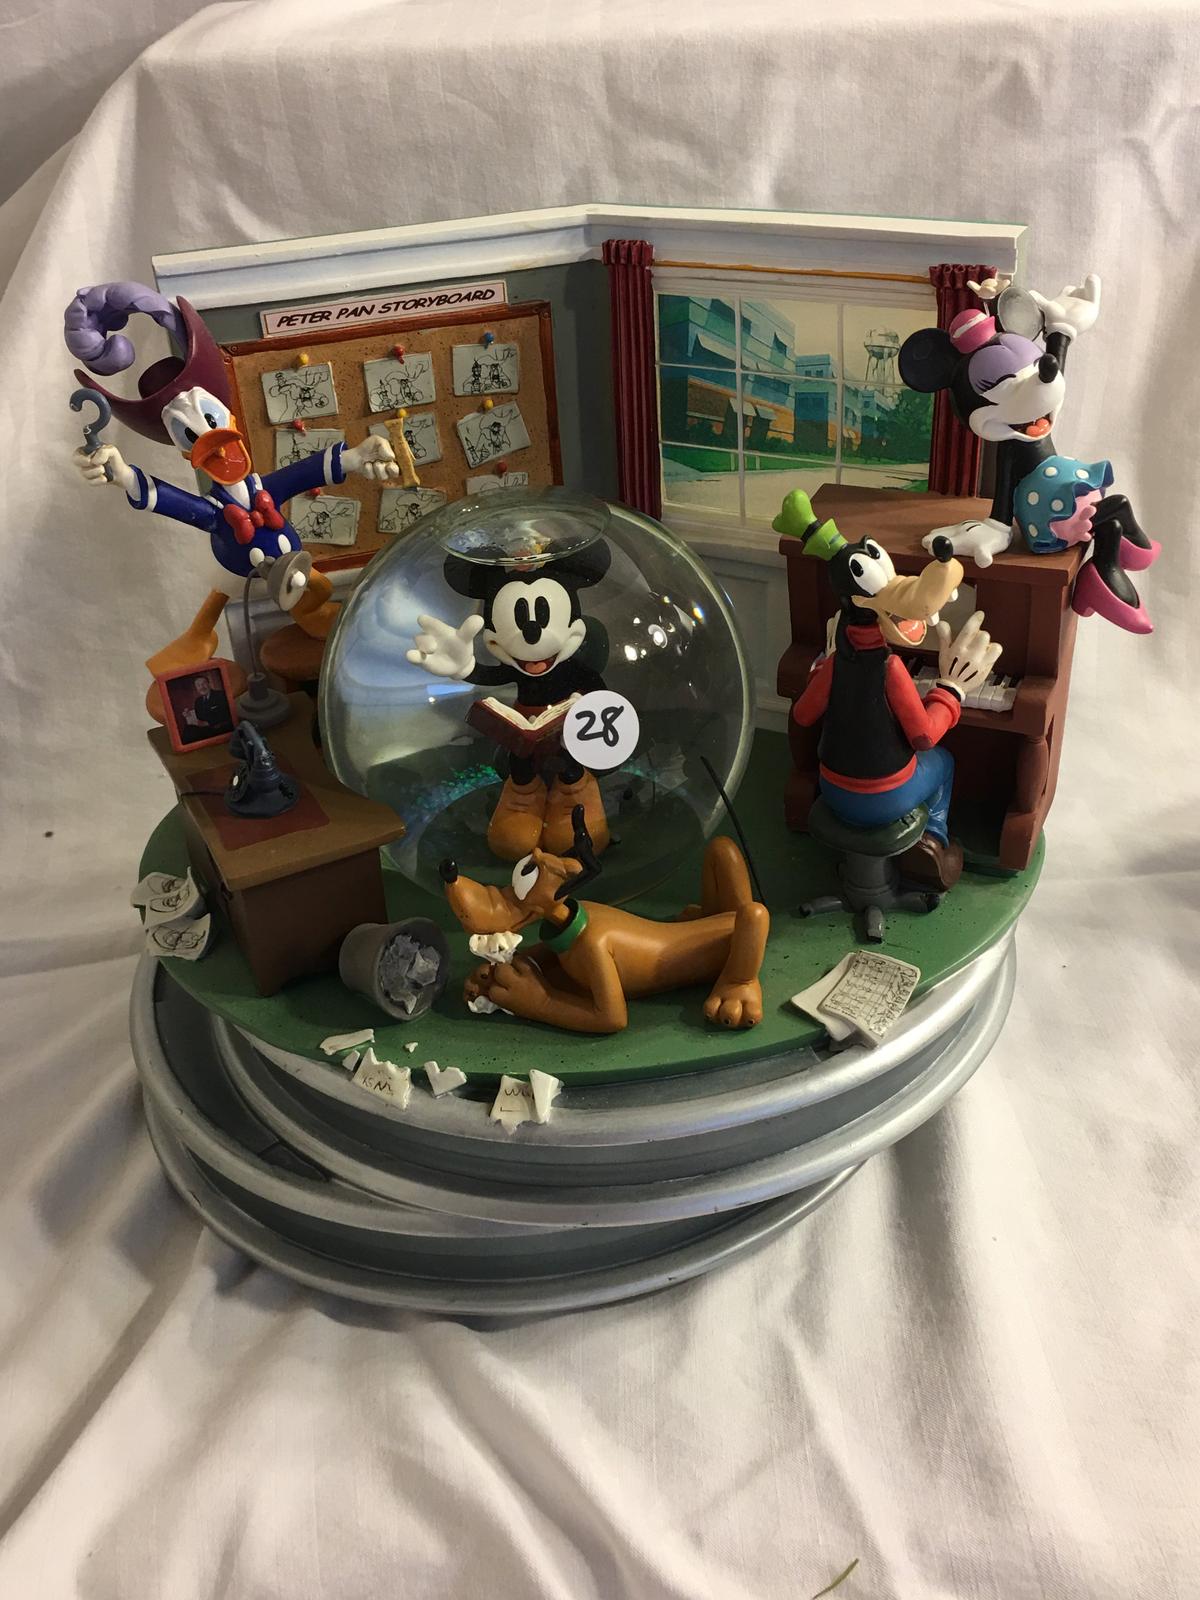 Collector Disney Tradition Jim Shore Enesco Mickey Mouse Snowglobe 9"x11" Has minor damage